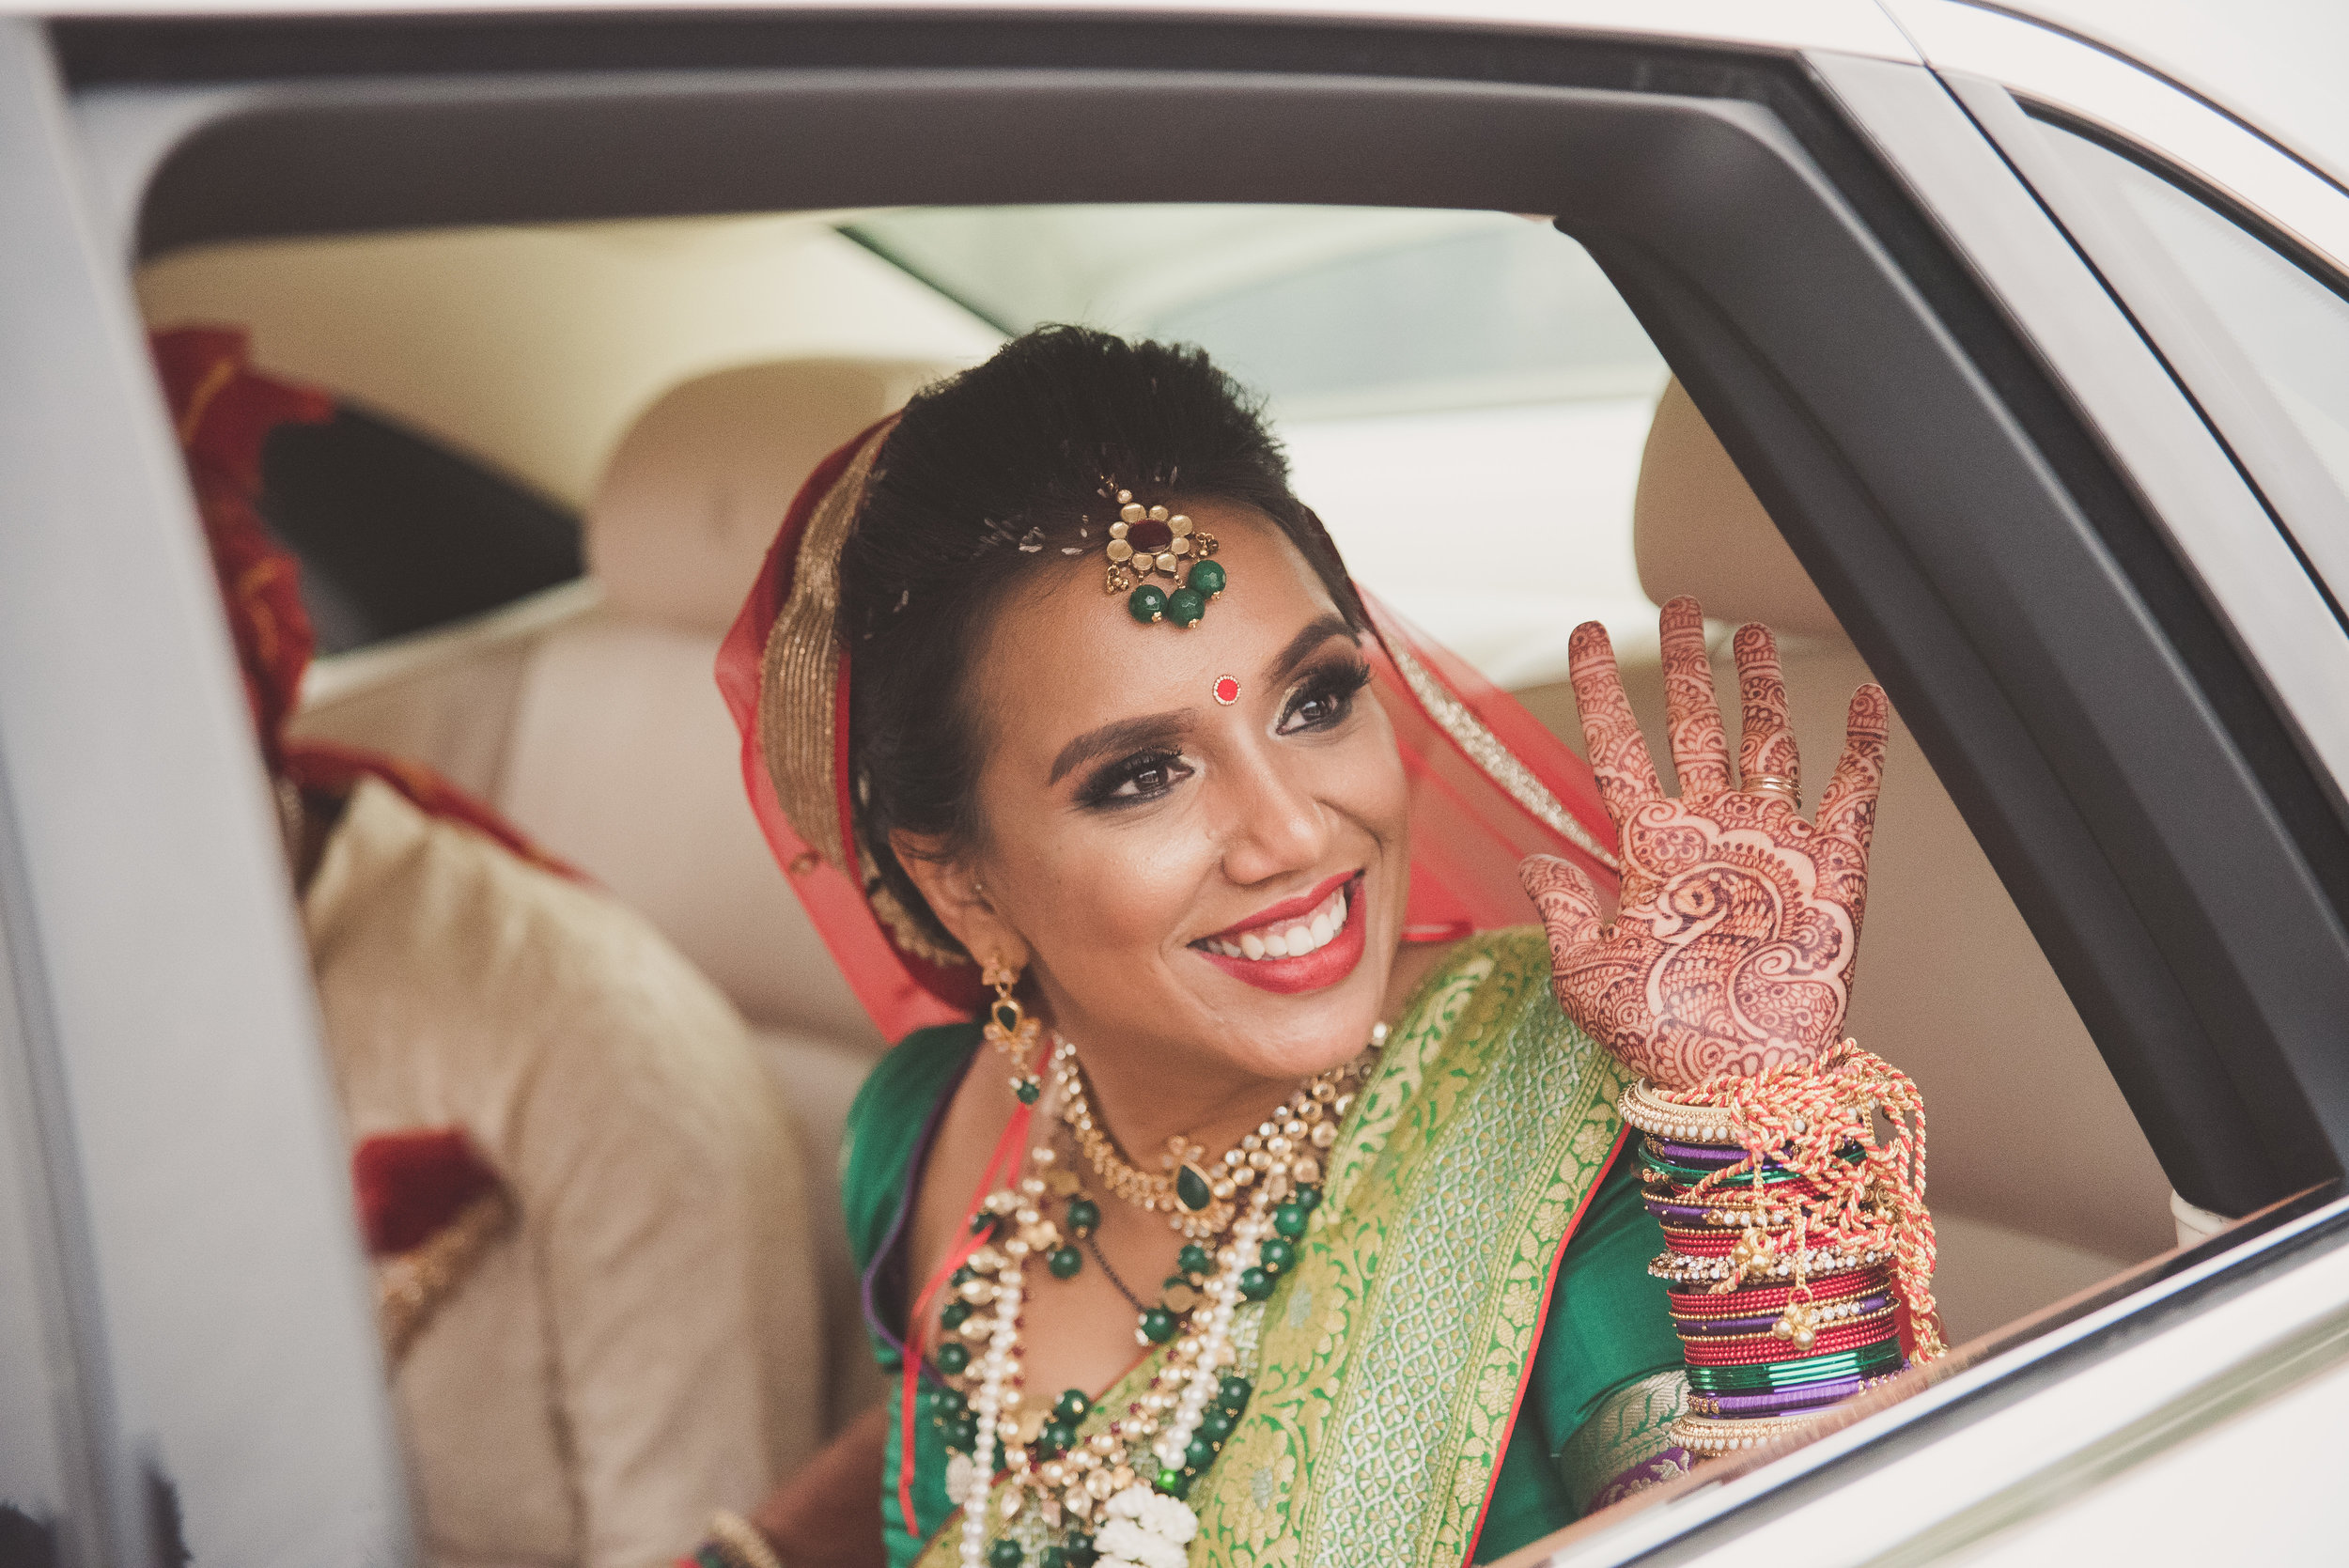 Hindu bride leaves the Oshwal Centre